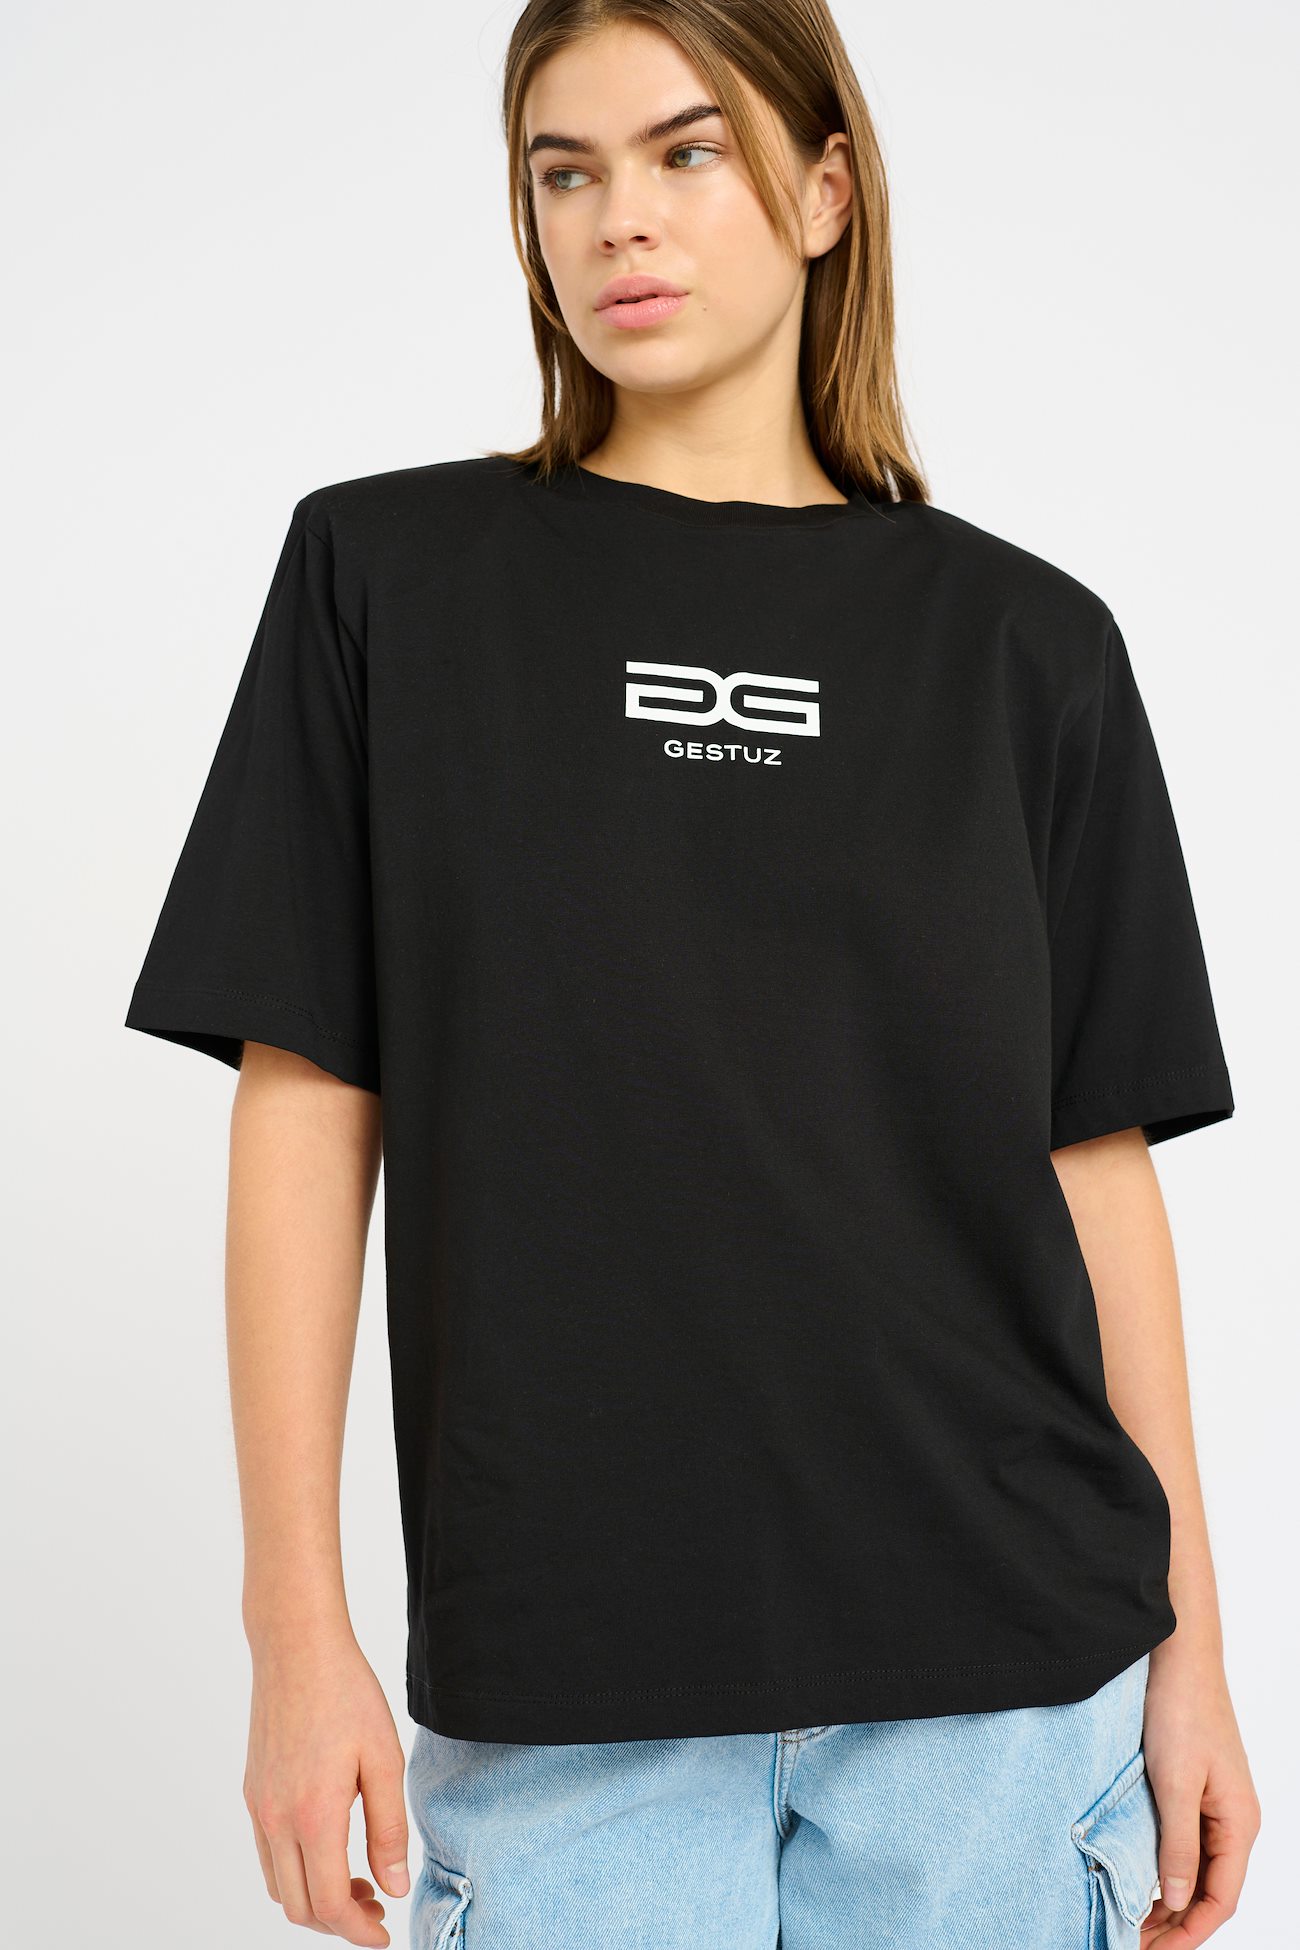 black-samurillygz-t-shirt.jpg